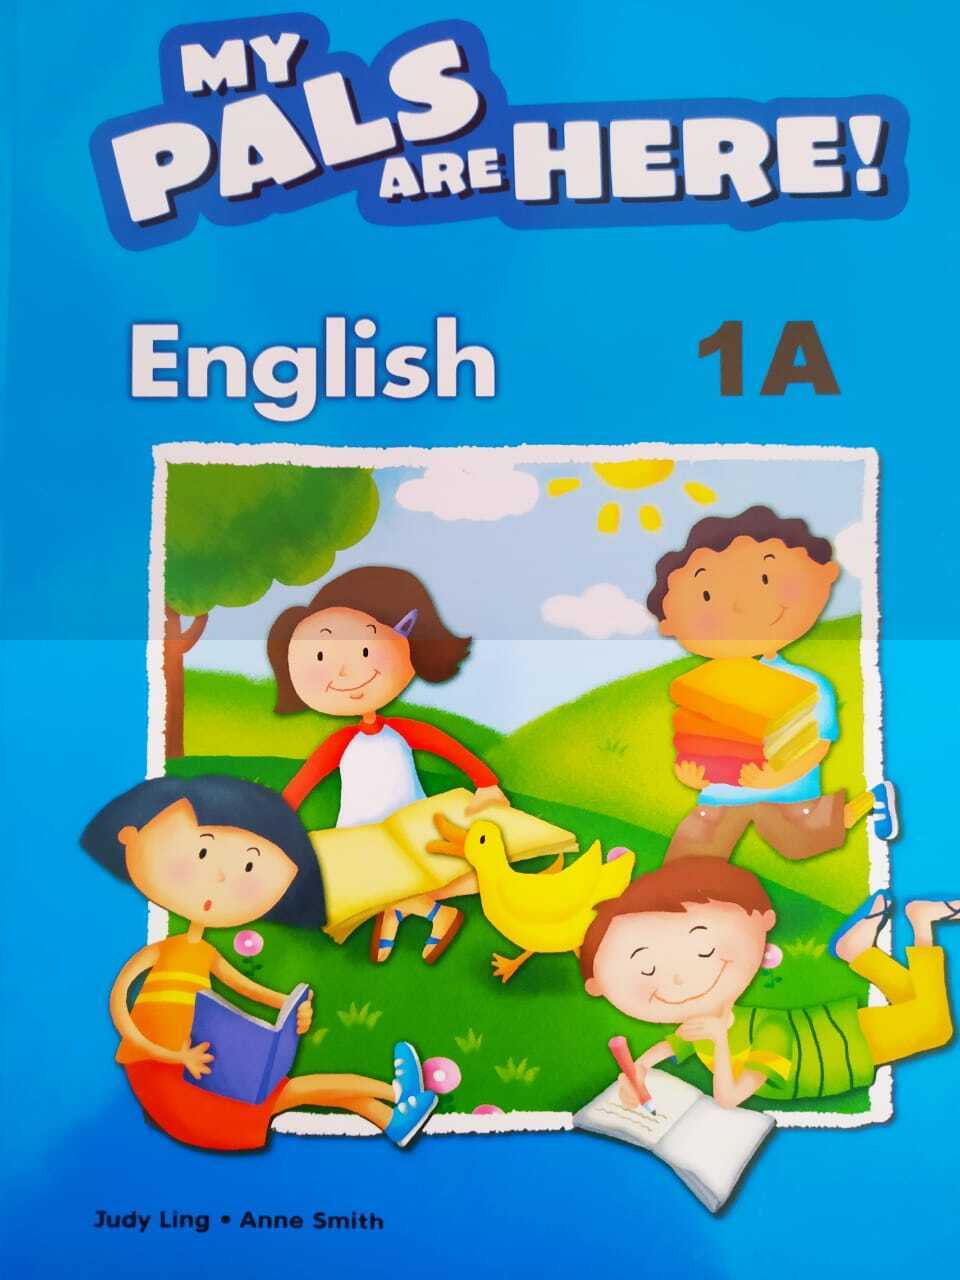 General English учебник. My Pals are here. Английский язык 2006 год. Islands учебник английского. Учебник английского языка team up